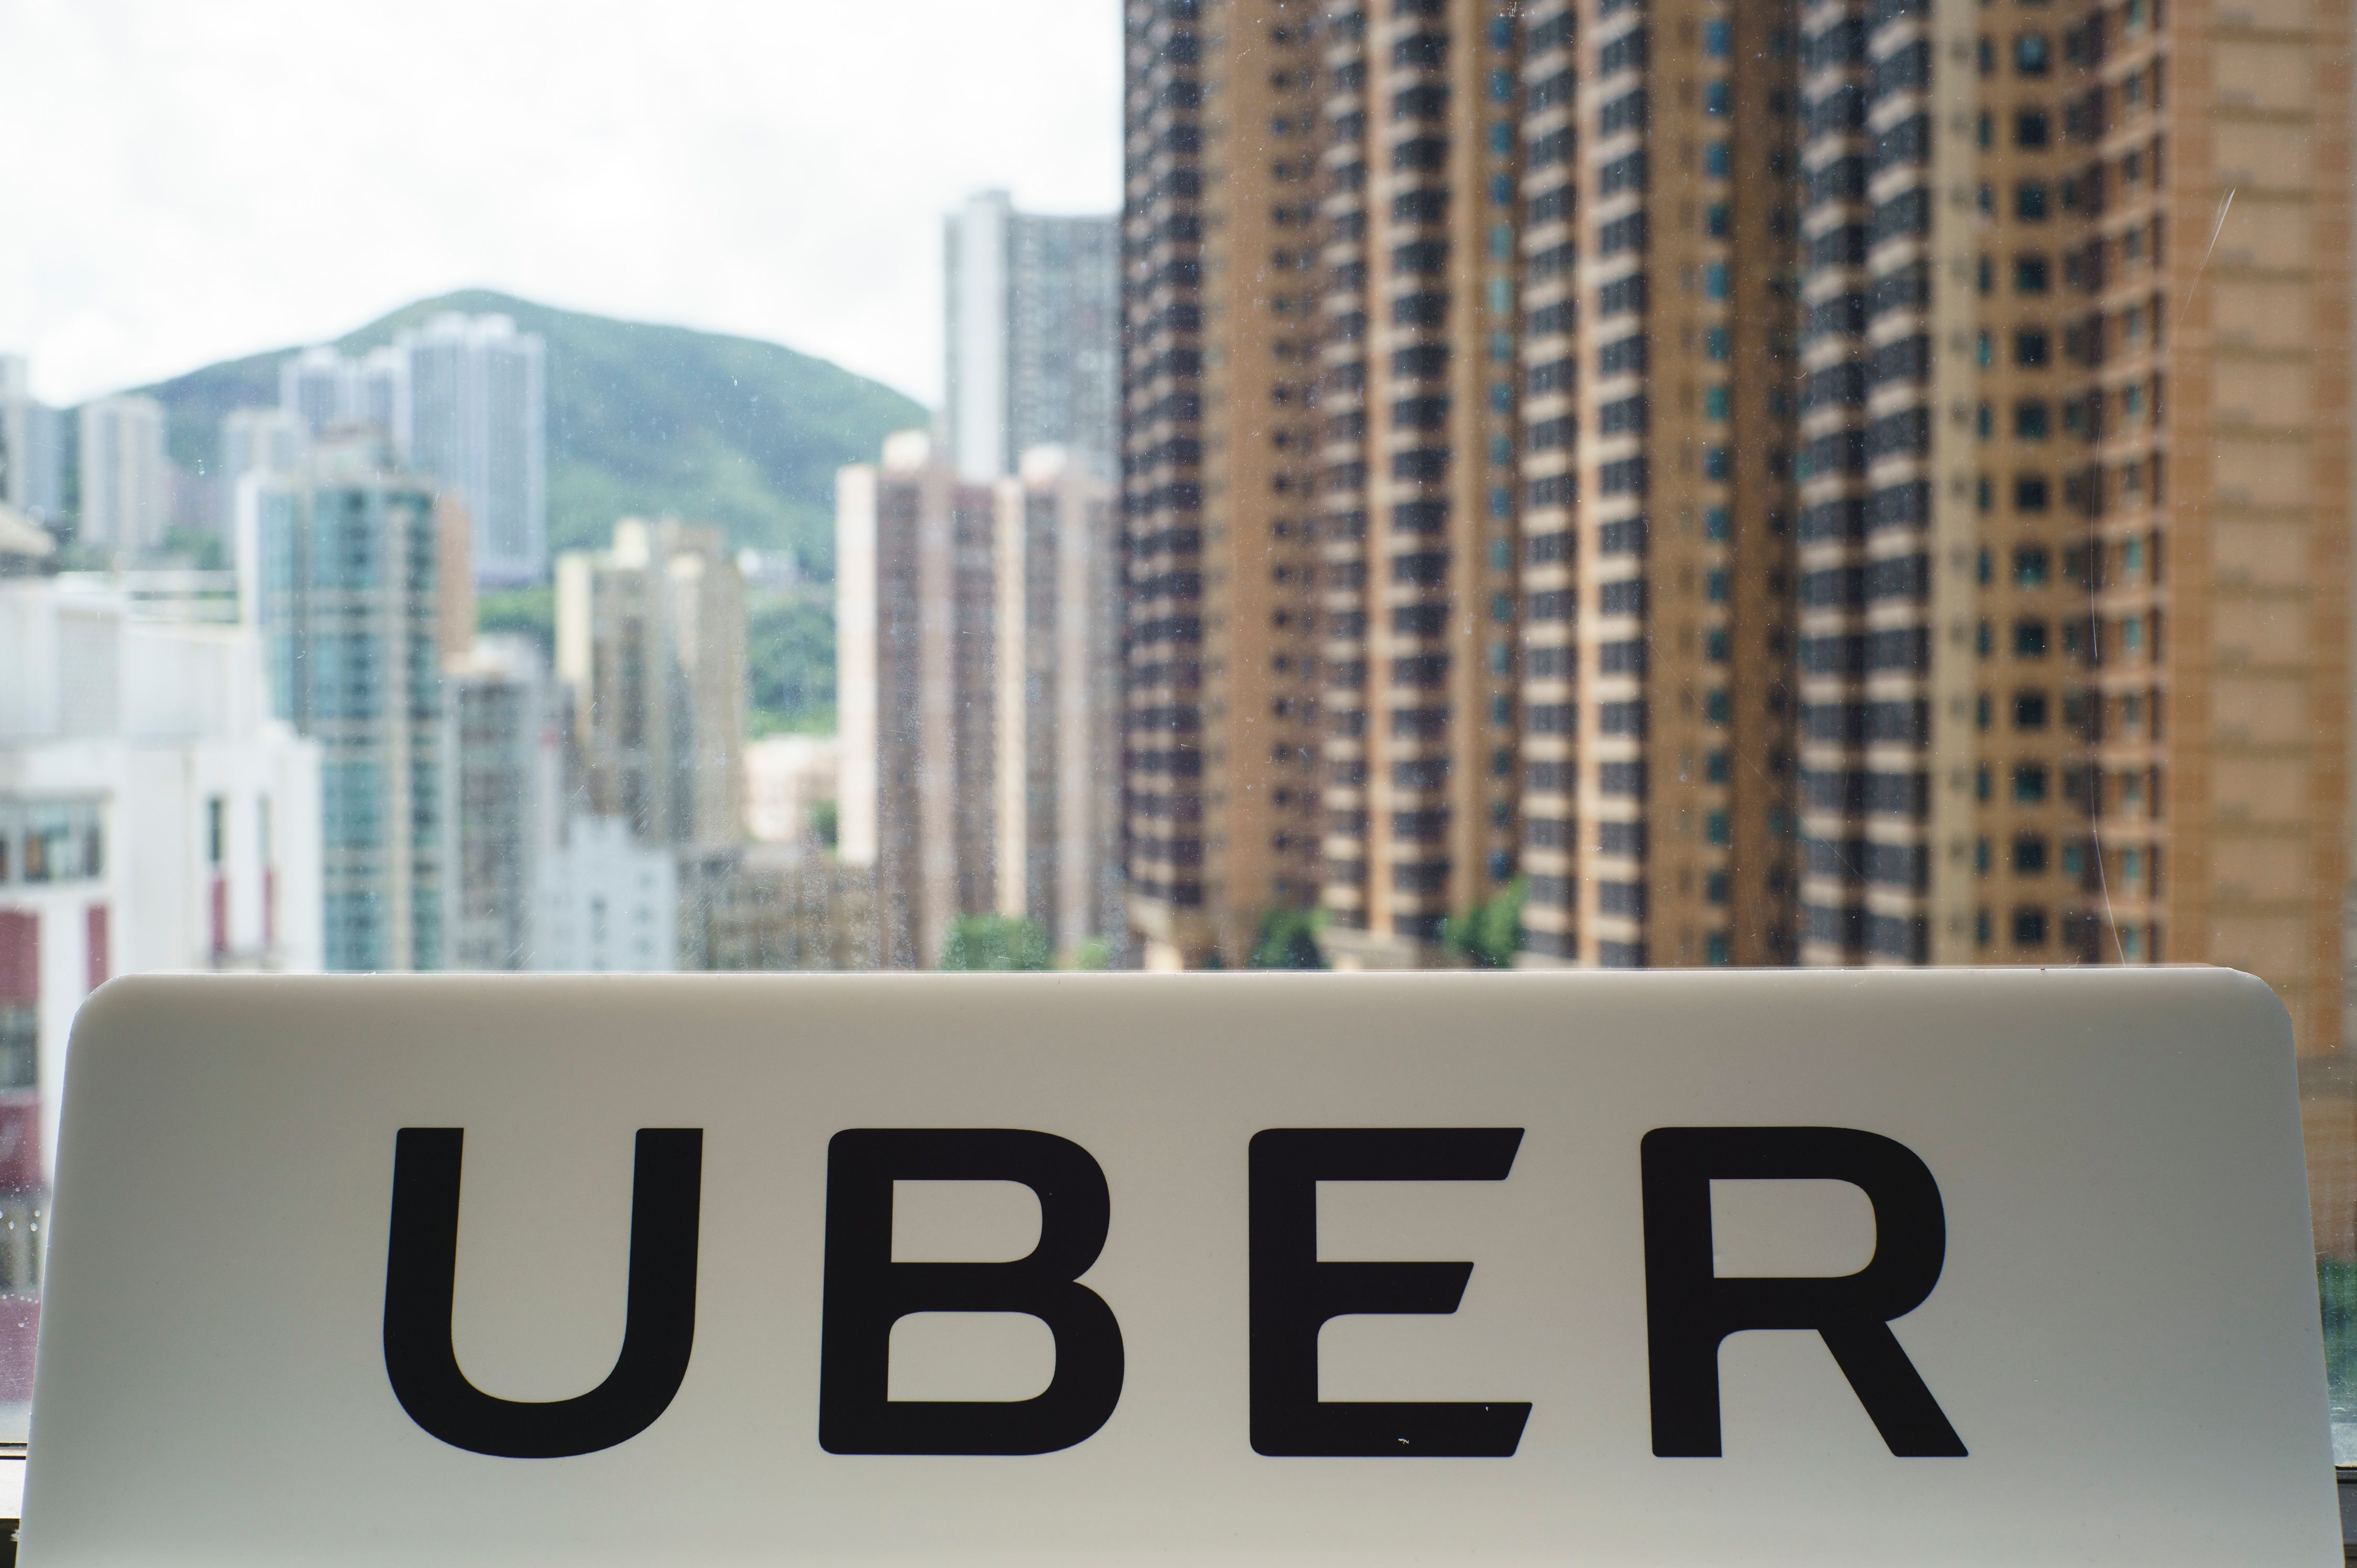 The Uber logo in Hong Kong